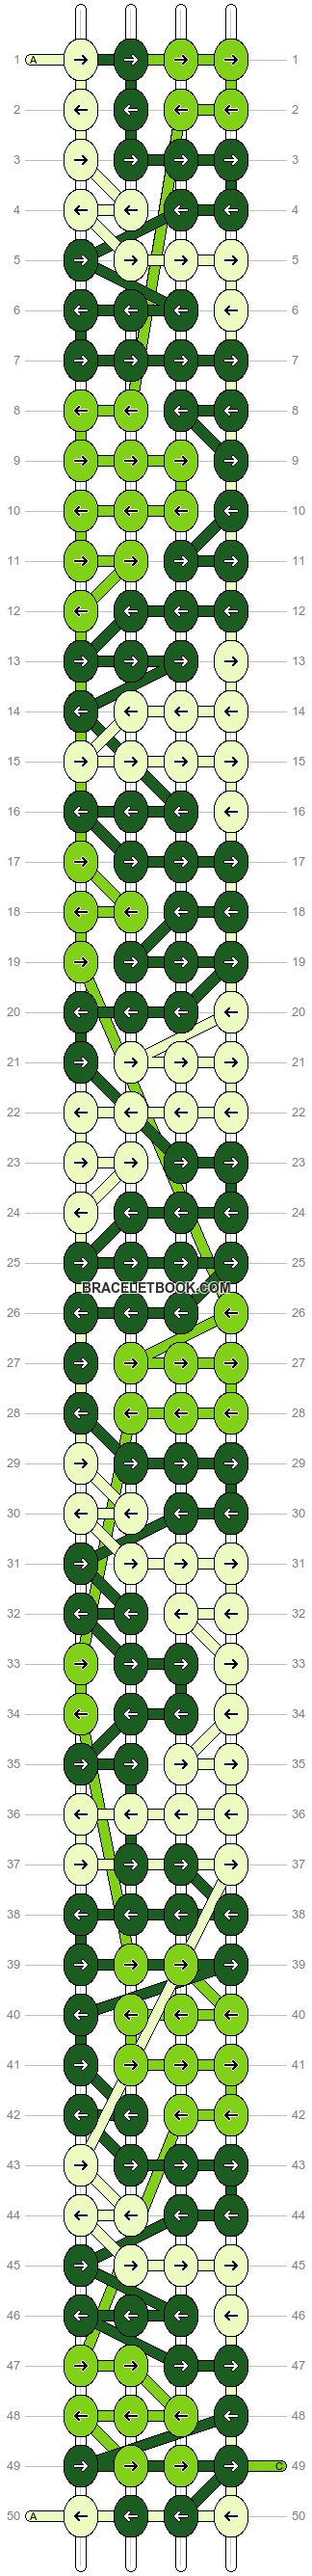 Alpha pattern #17845 variation #113923 pattern